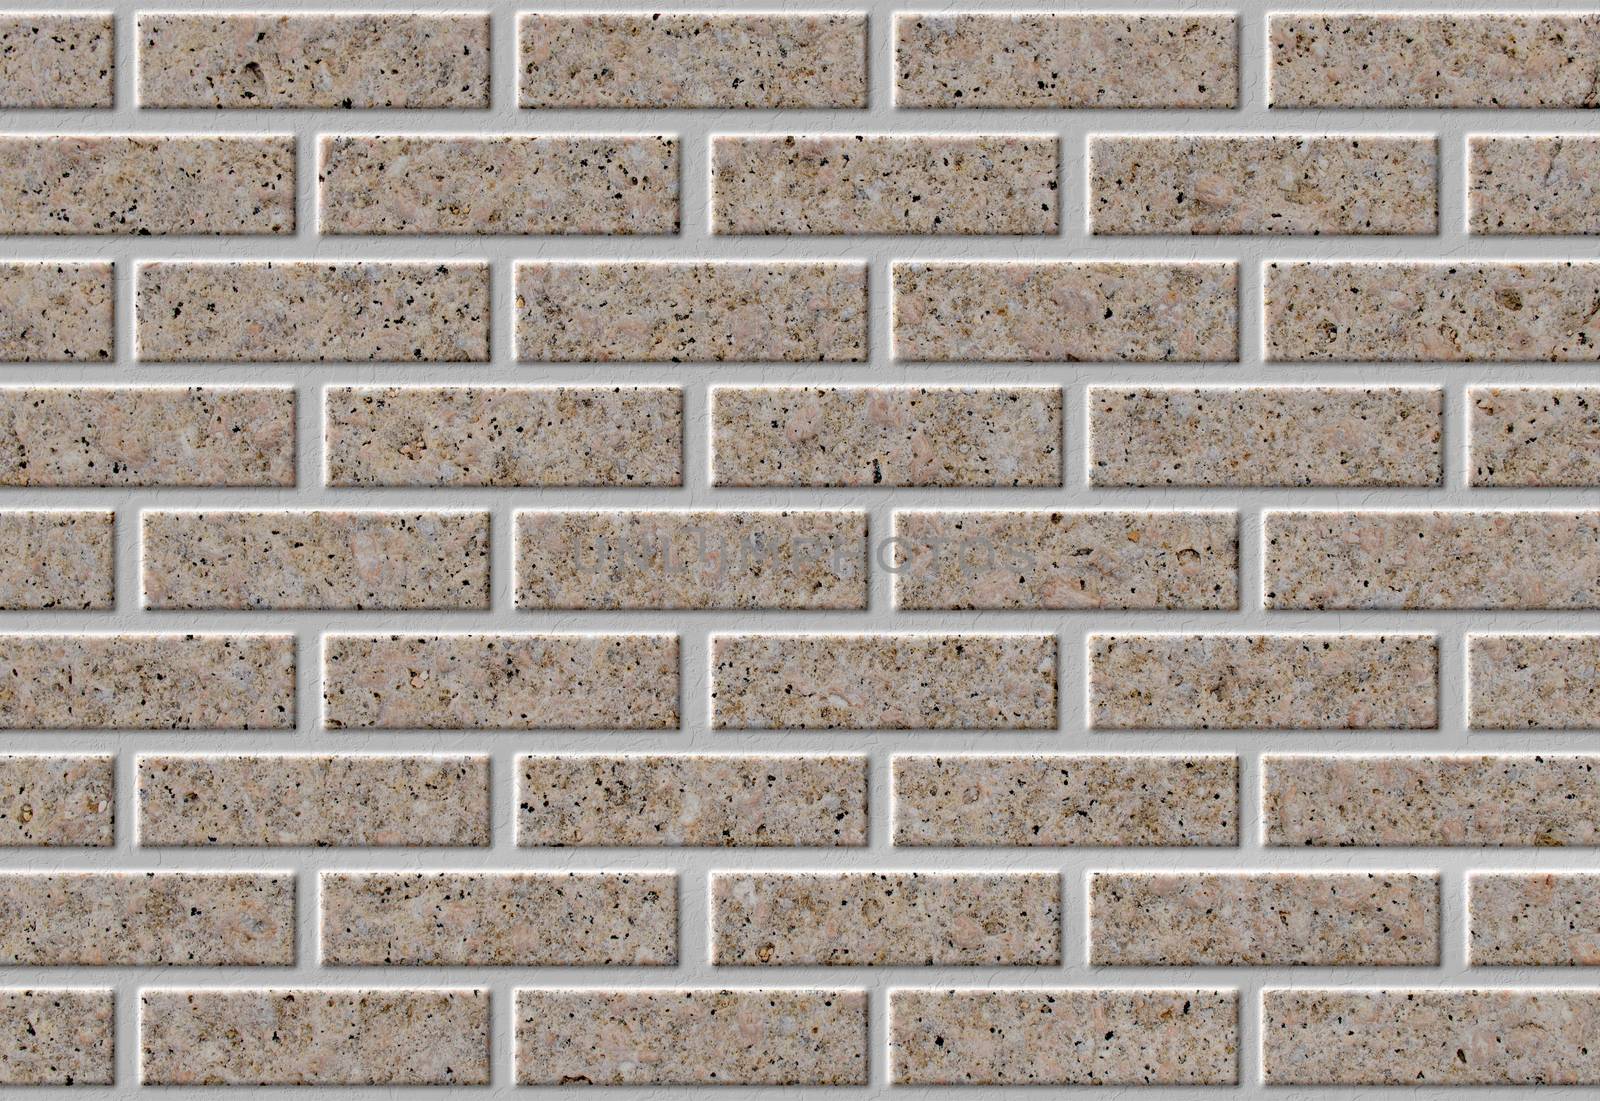 Brick wall illustration. Pattern of decorative wall surface